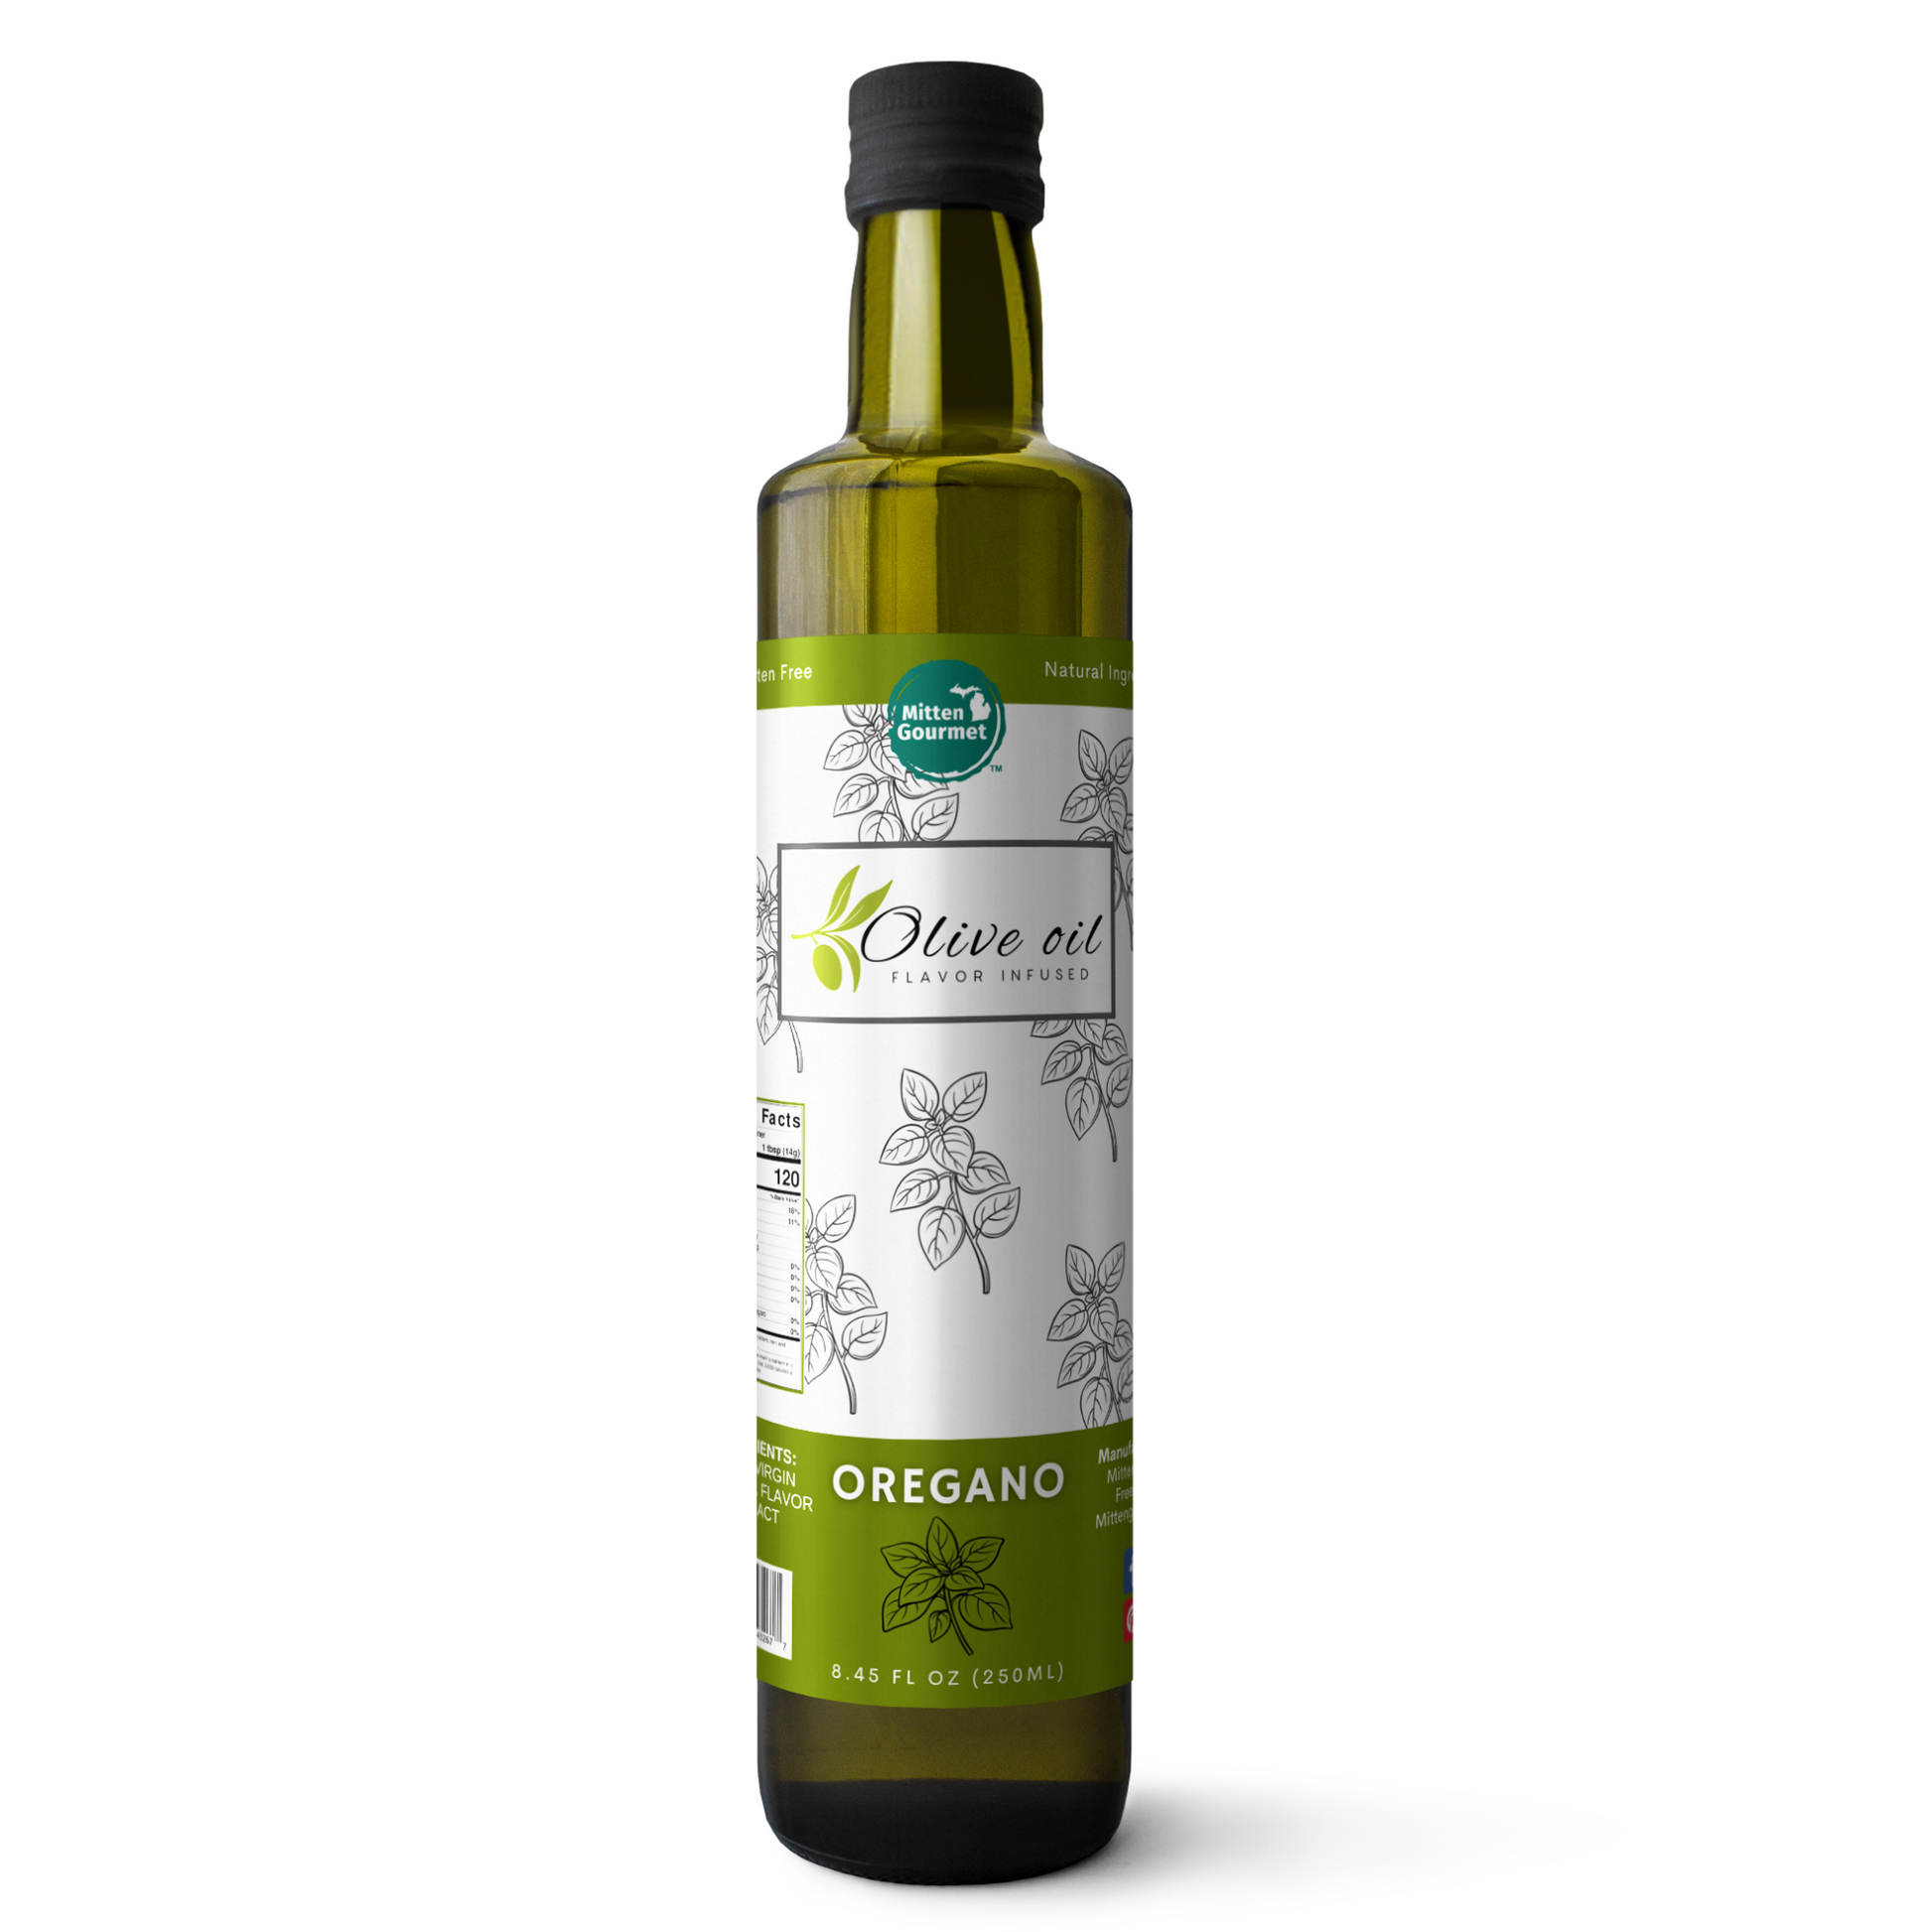 Extra Virgin Olive Oil - Oregano, Cooking, Flavor Infused, Oregano Olive Oil